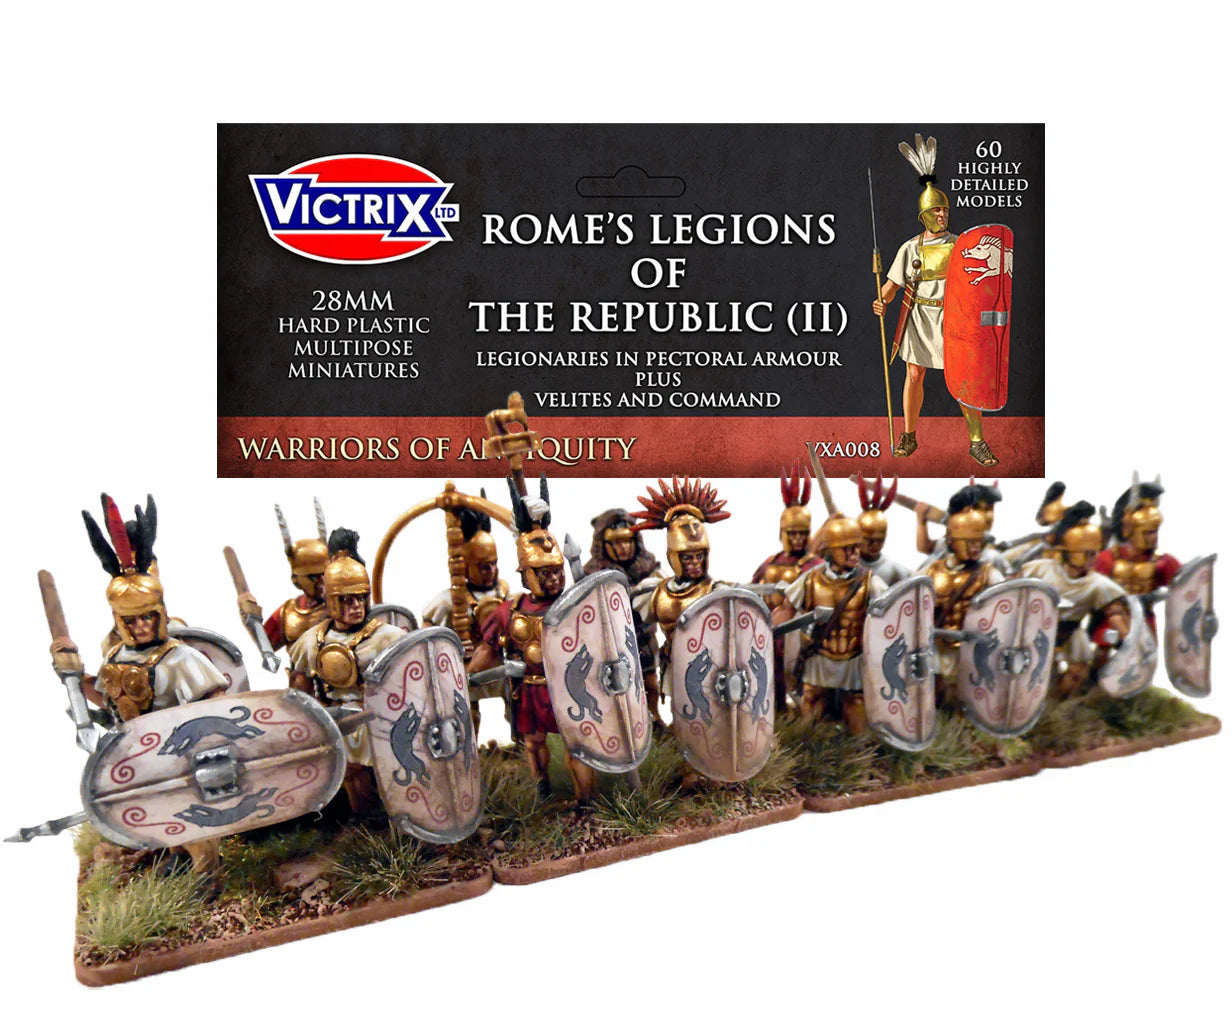 Romes Legions of the Republic (II) Pectoral Armour